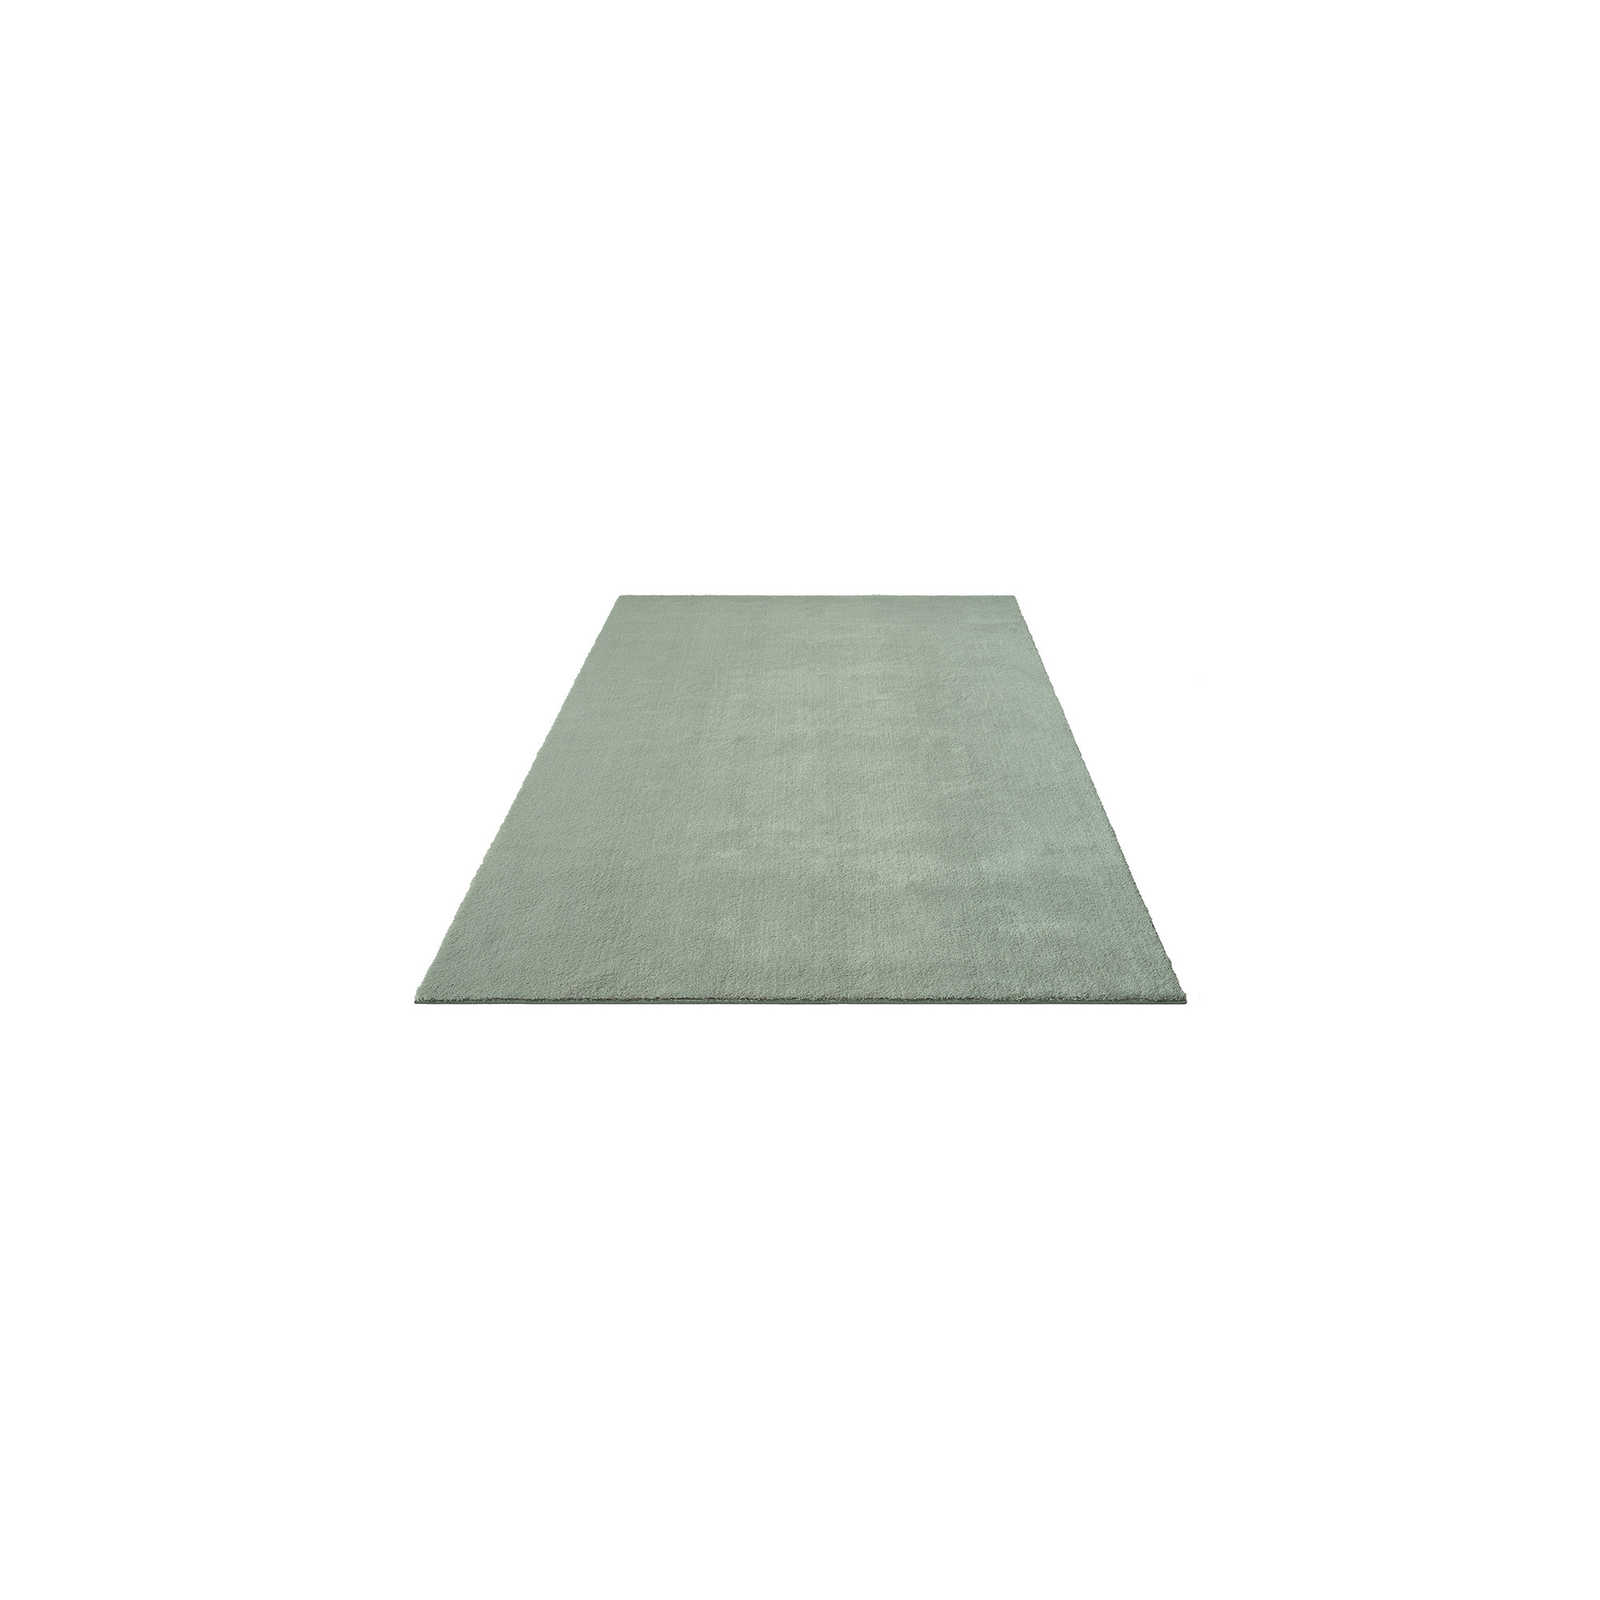 Soft high pile carpet in green - 170 x 120 cm
